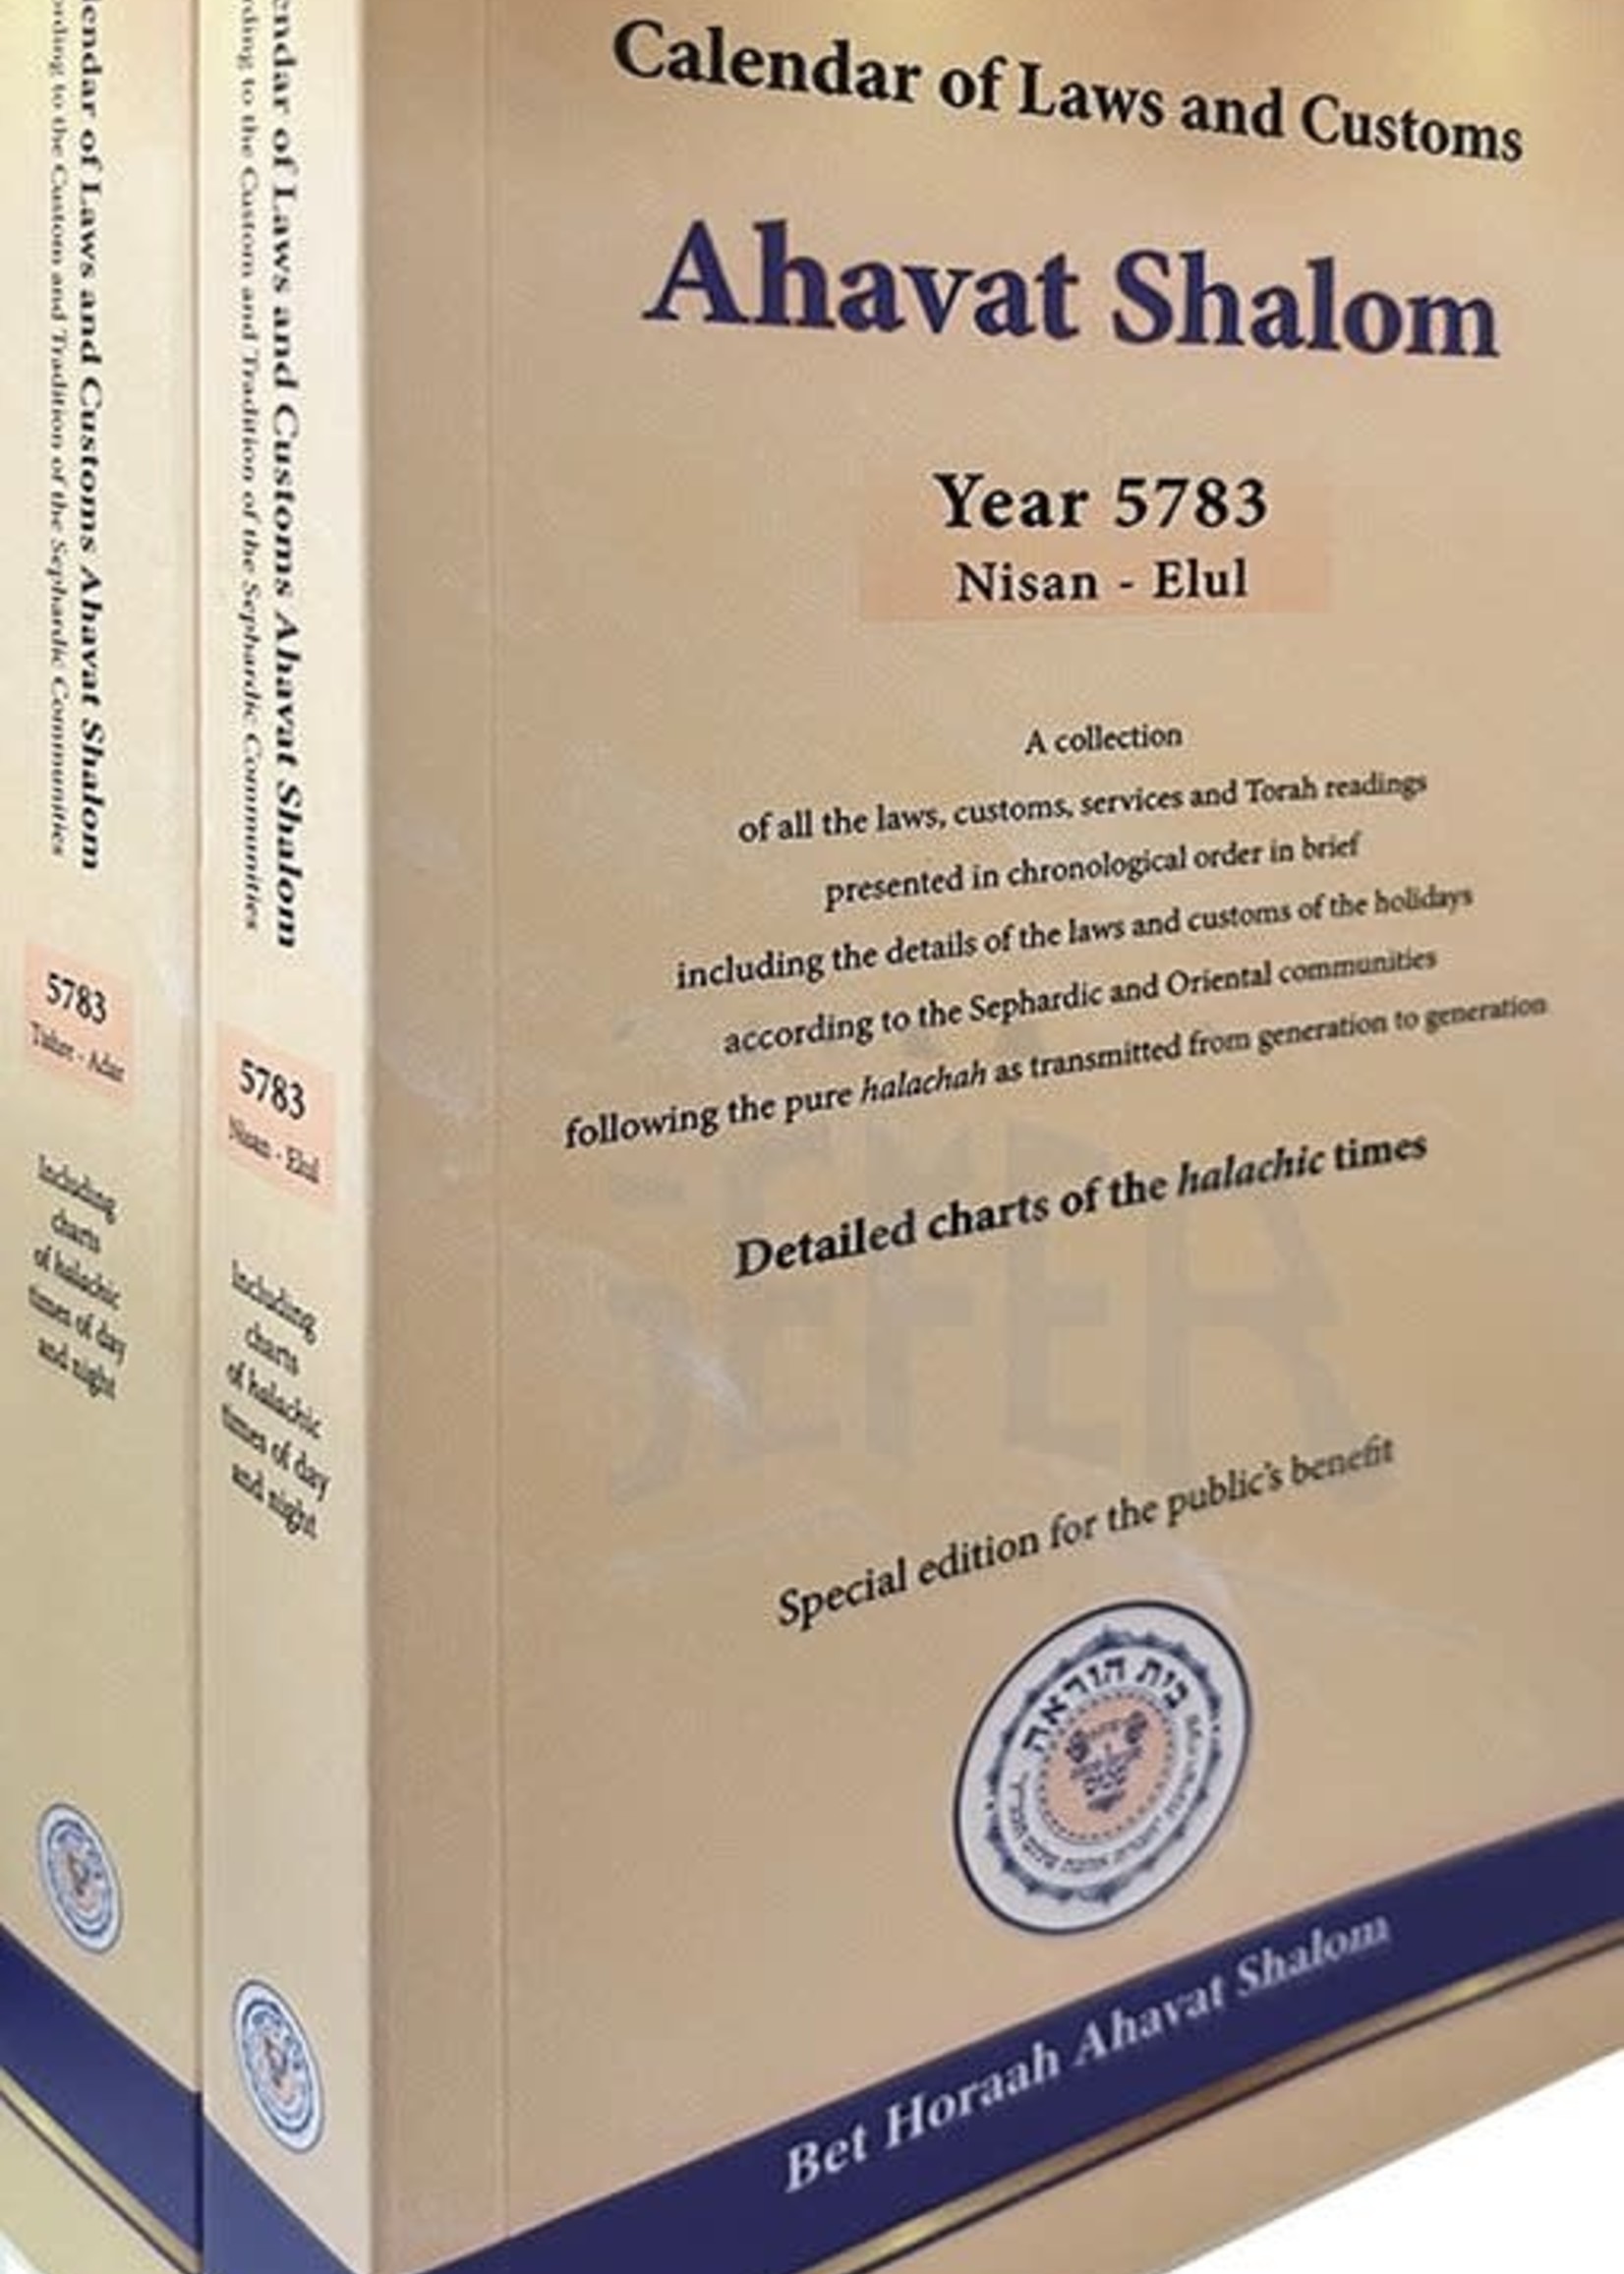 Calendar of Laws and Customs - Ahavat Shalom (Year 5783)